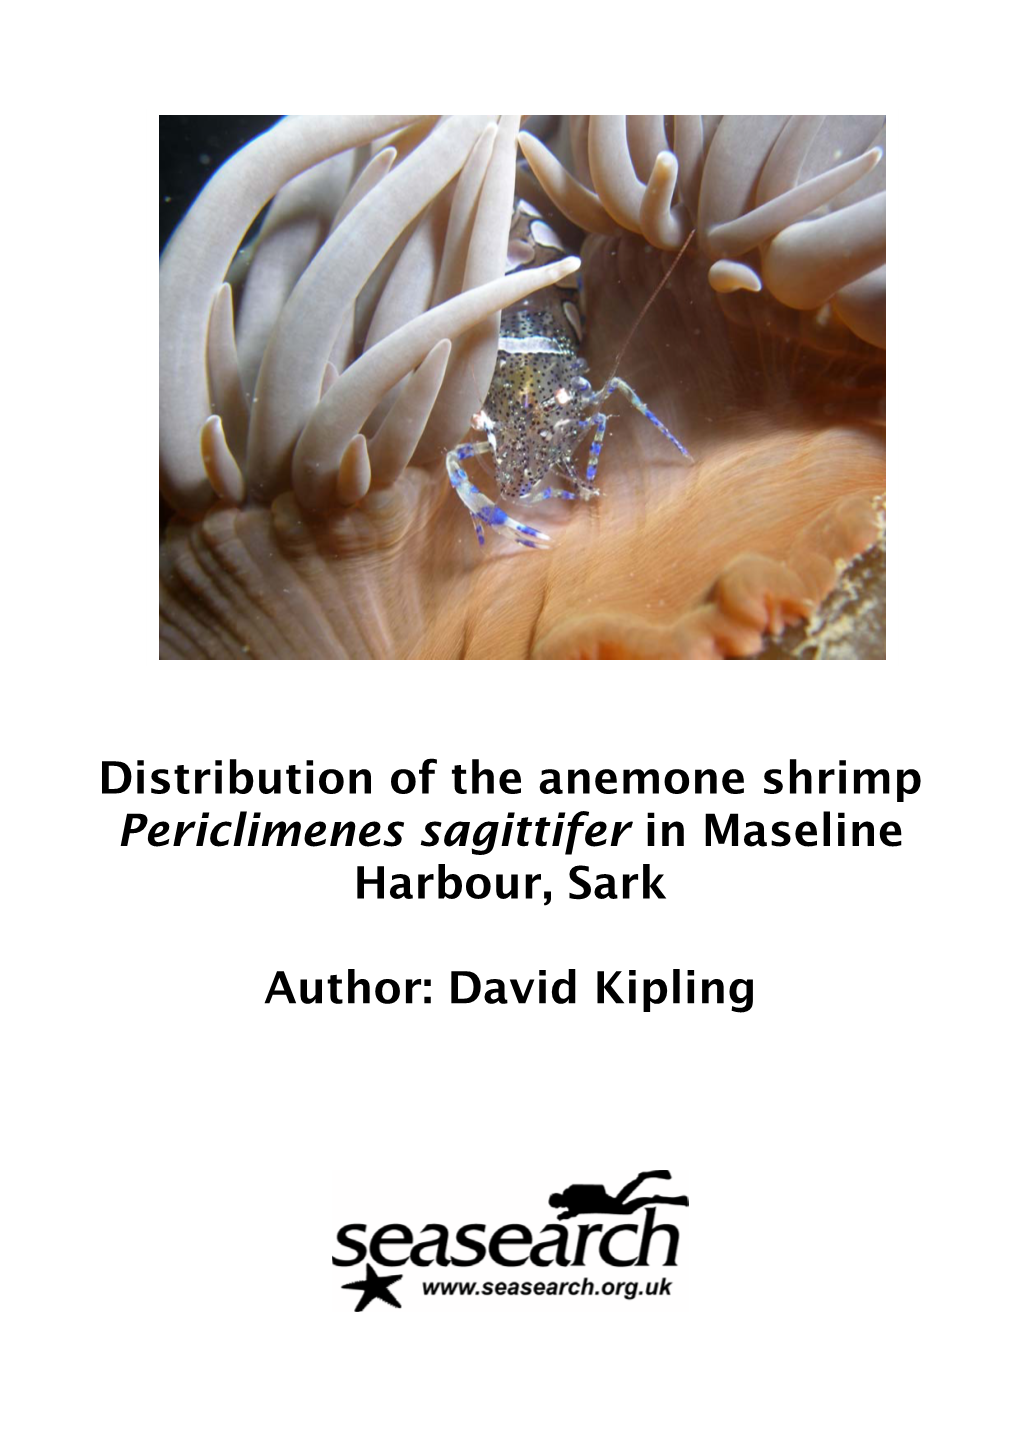 Distribution of the Anemone Shrimp Periclimenes Sagittifer in Maseline Harbour, Sark